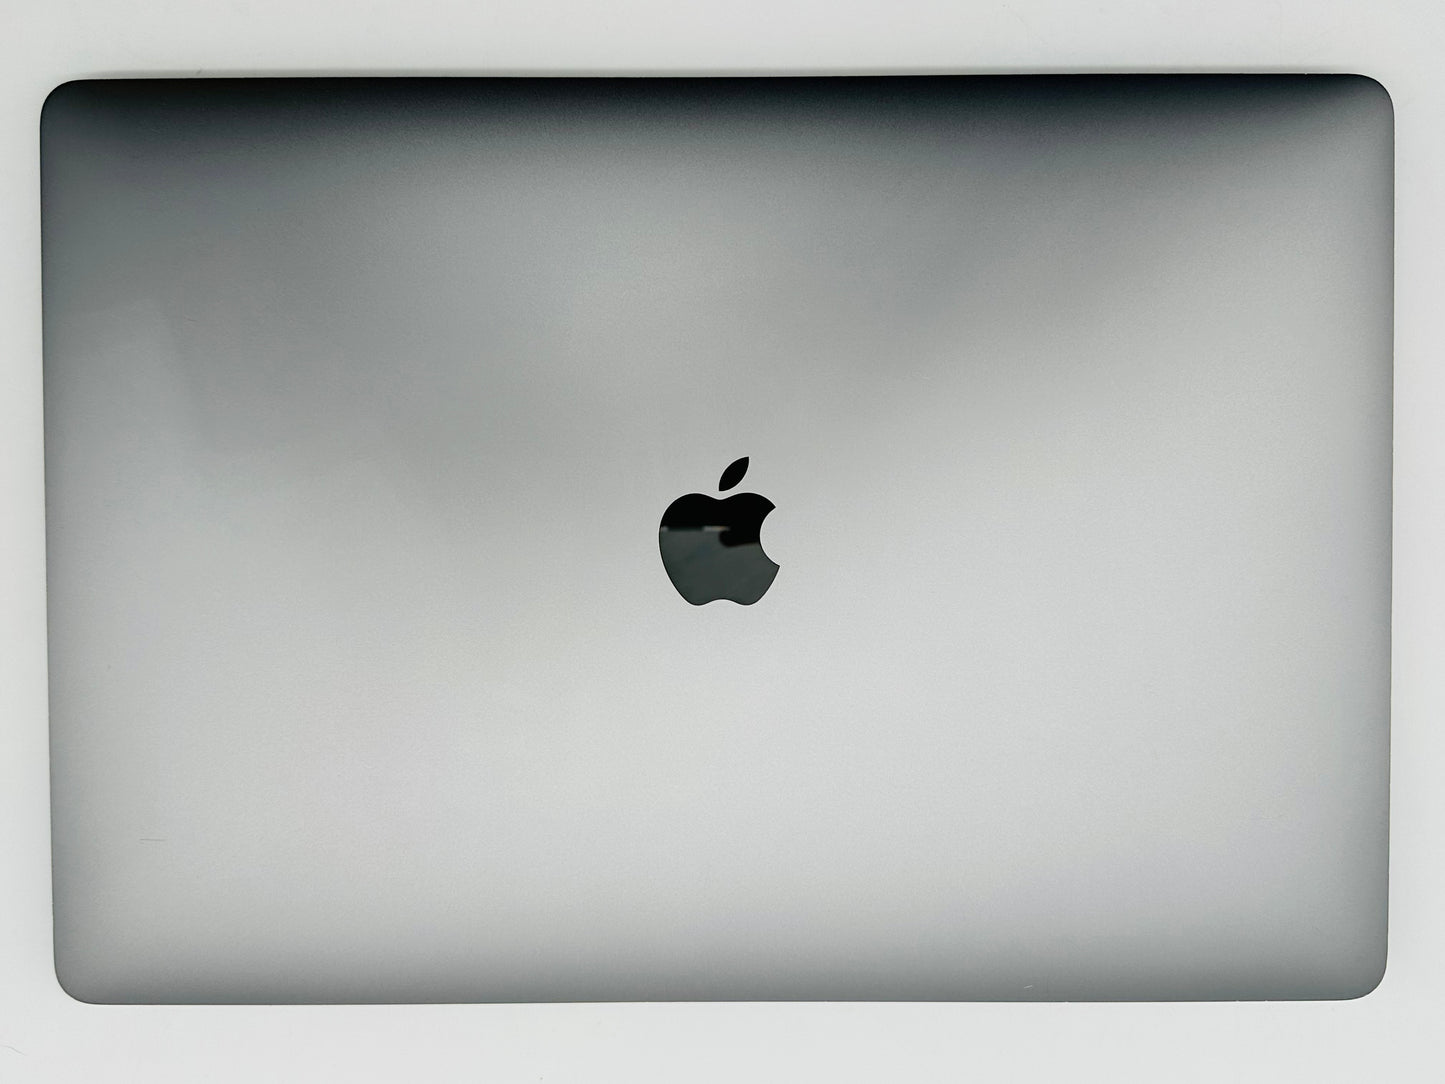 Apple 2019 15 in MacBook Pro TB 2.6GHz 6-Core i7 16GB RAM 512GB SSD RP560X 4GB